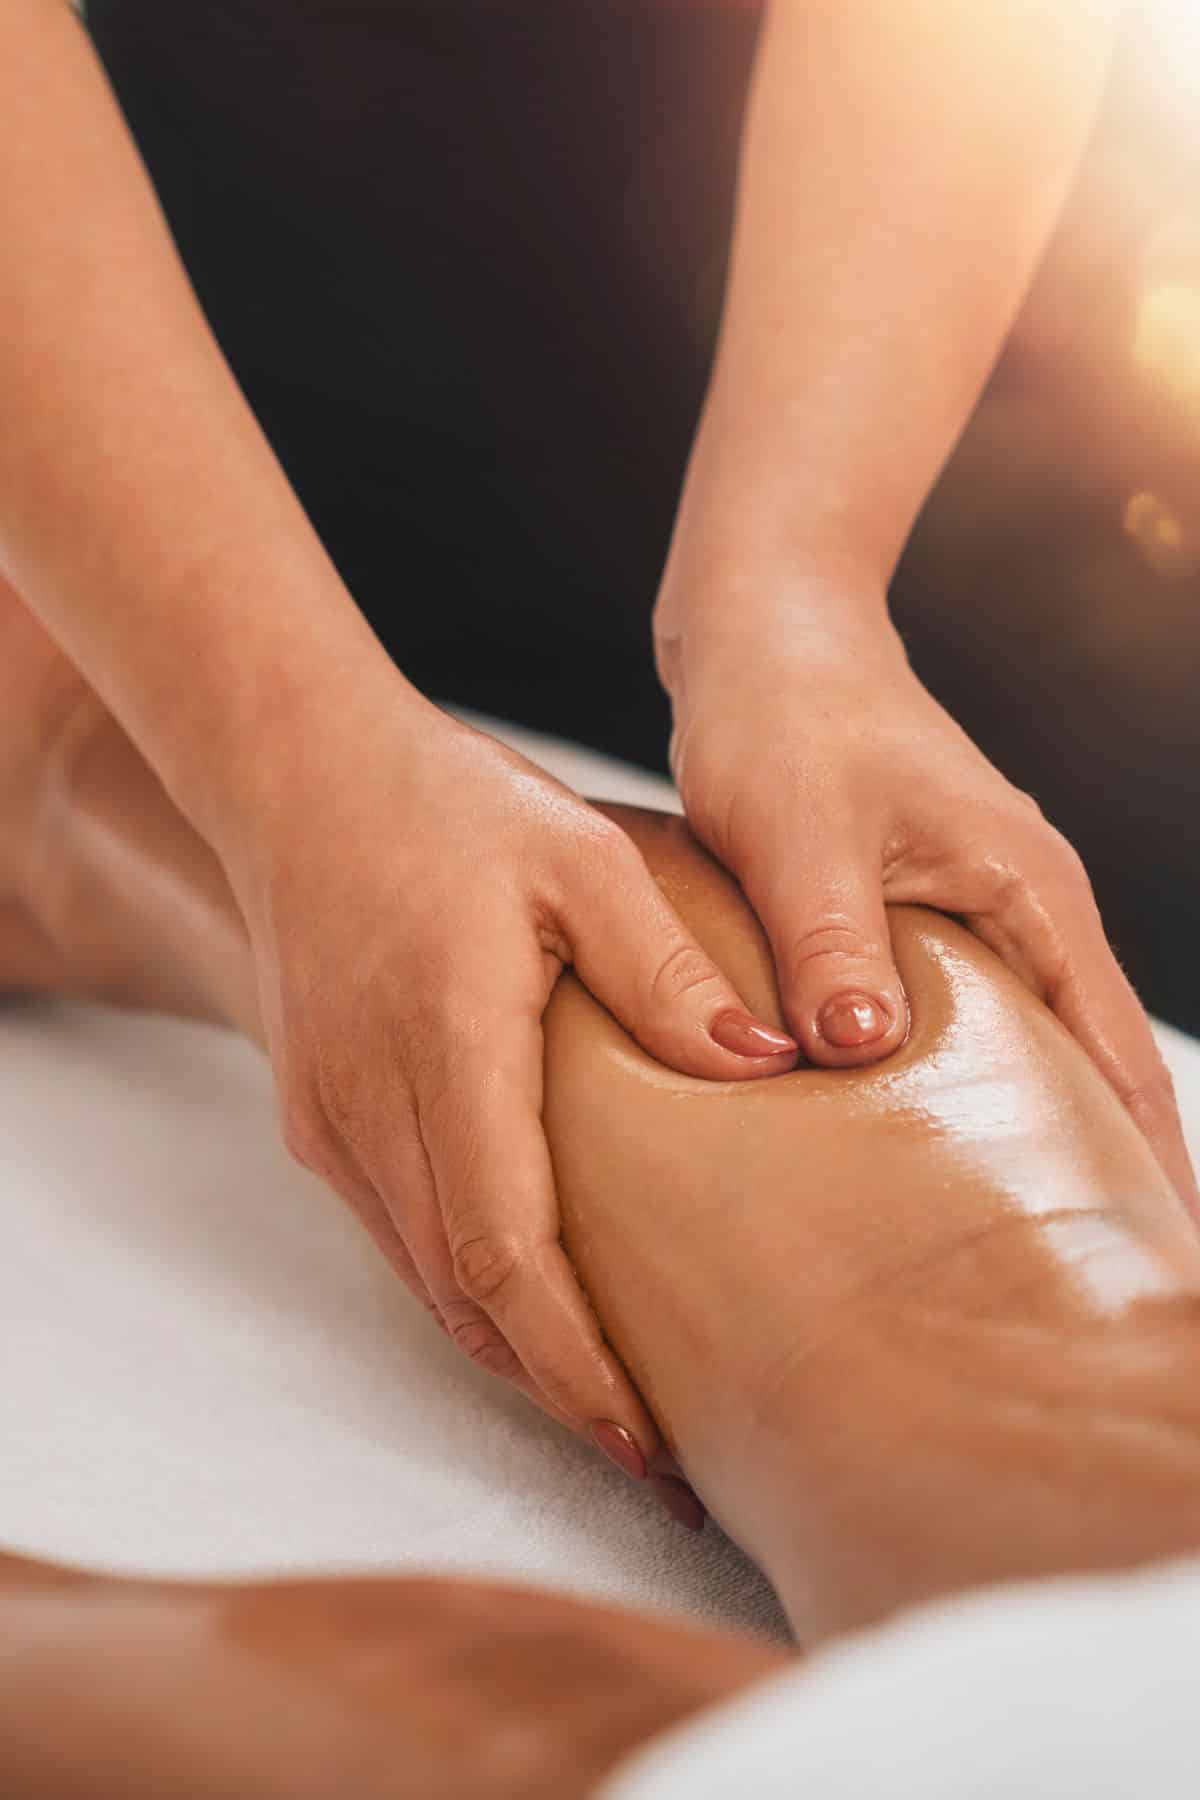 a person massaging someone's leg.